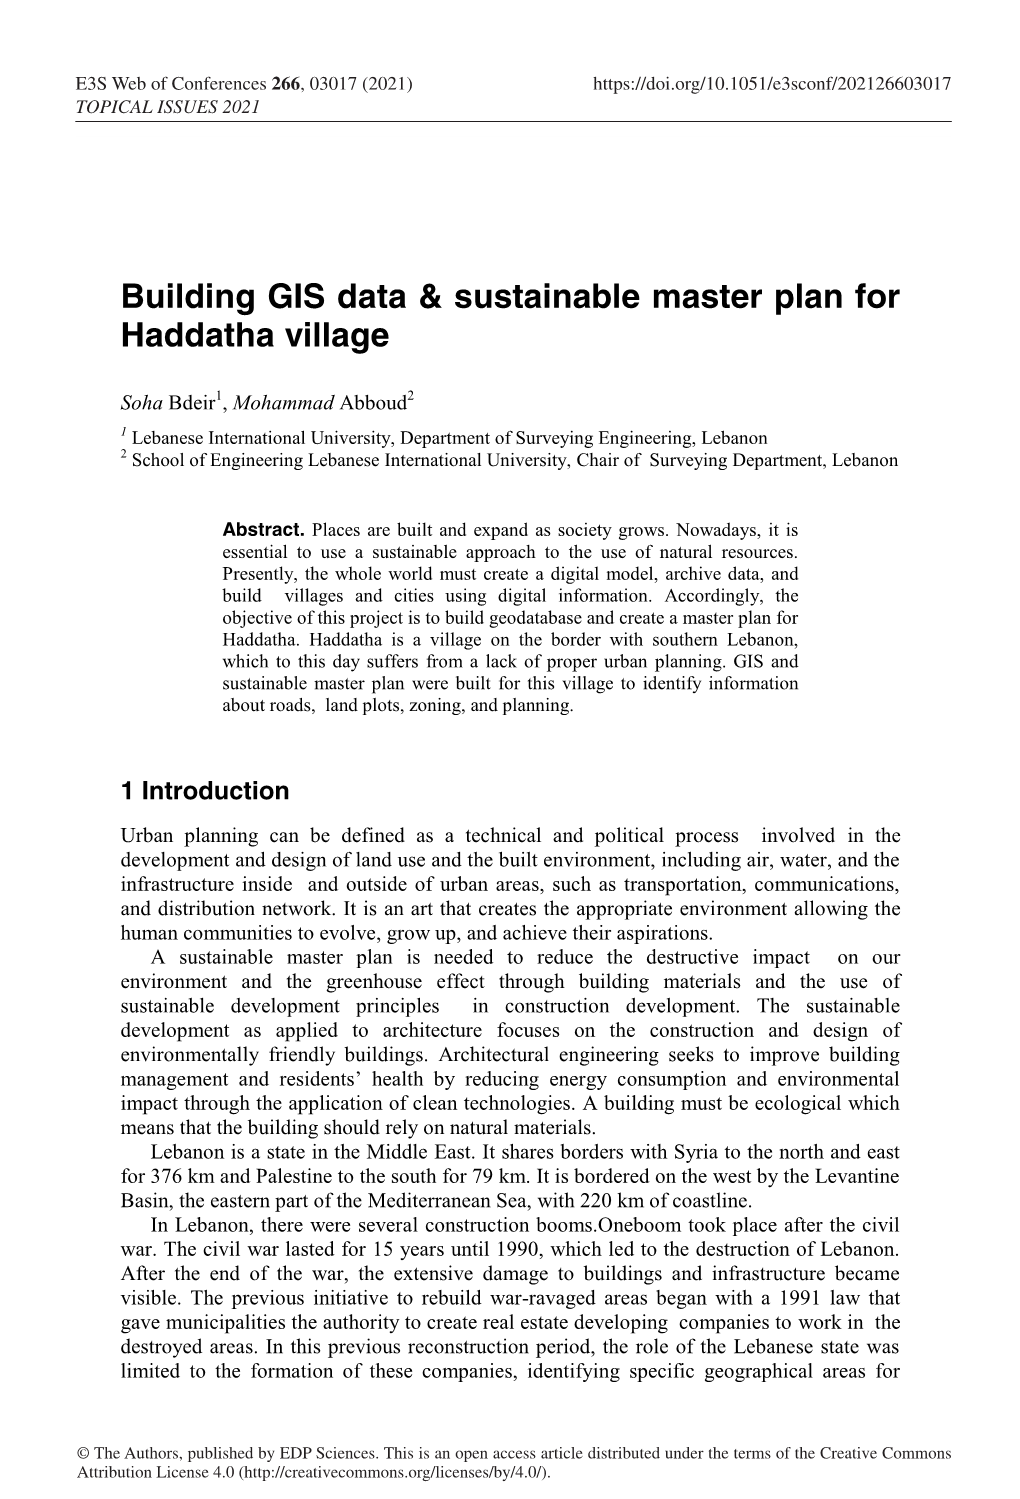 Sustainable Master Plan for Haddatha Village